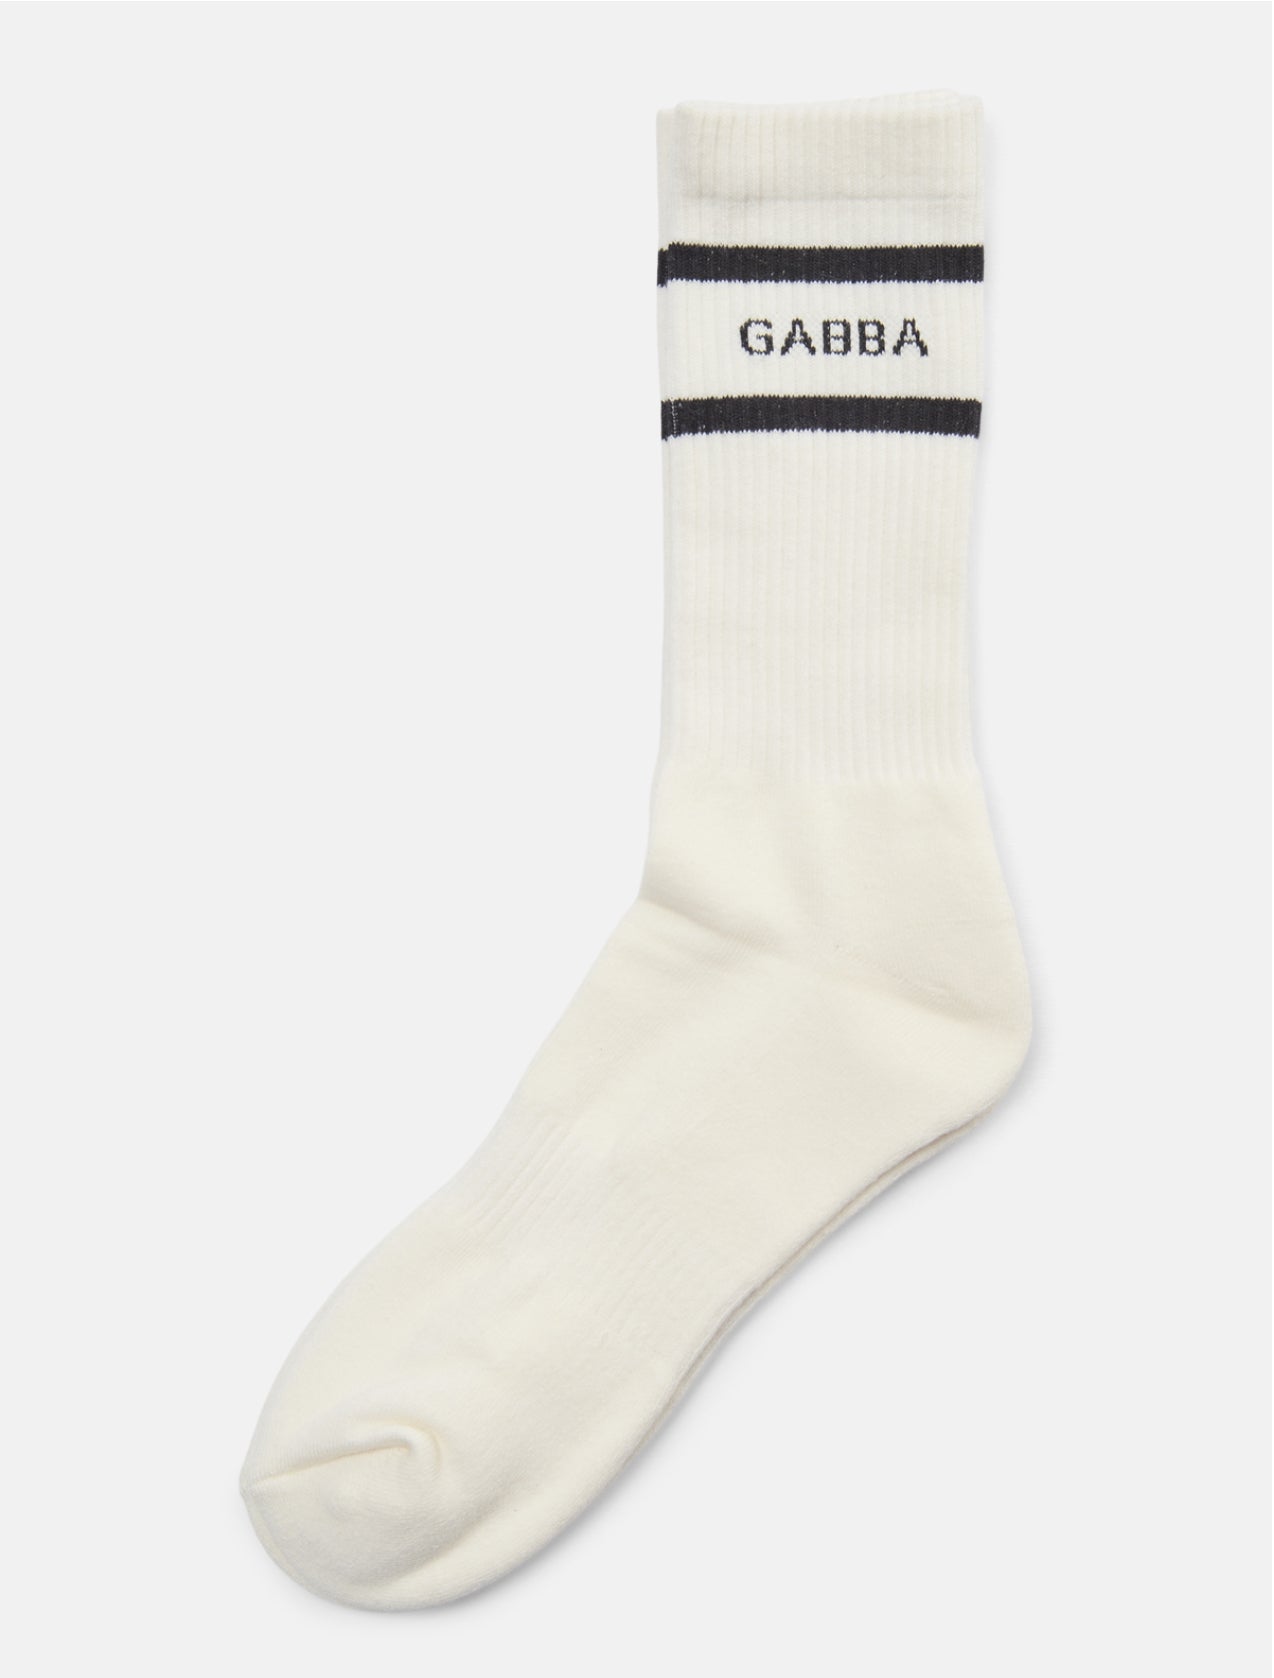 GABBA Loris Socks - White